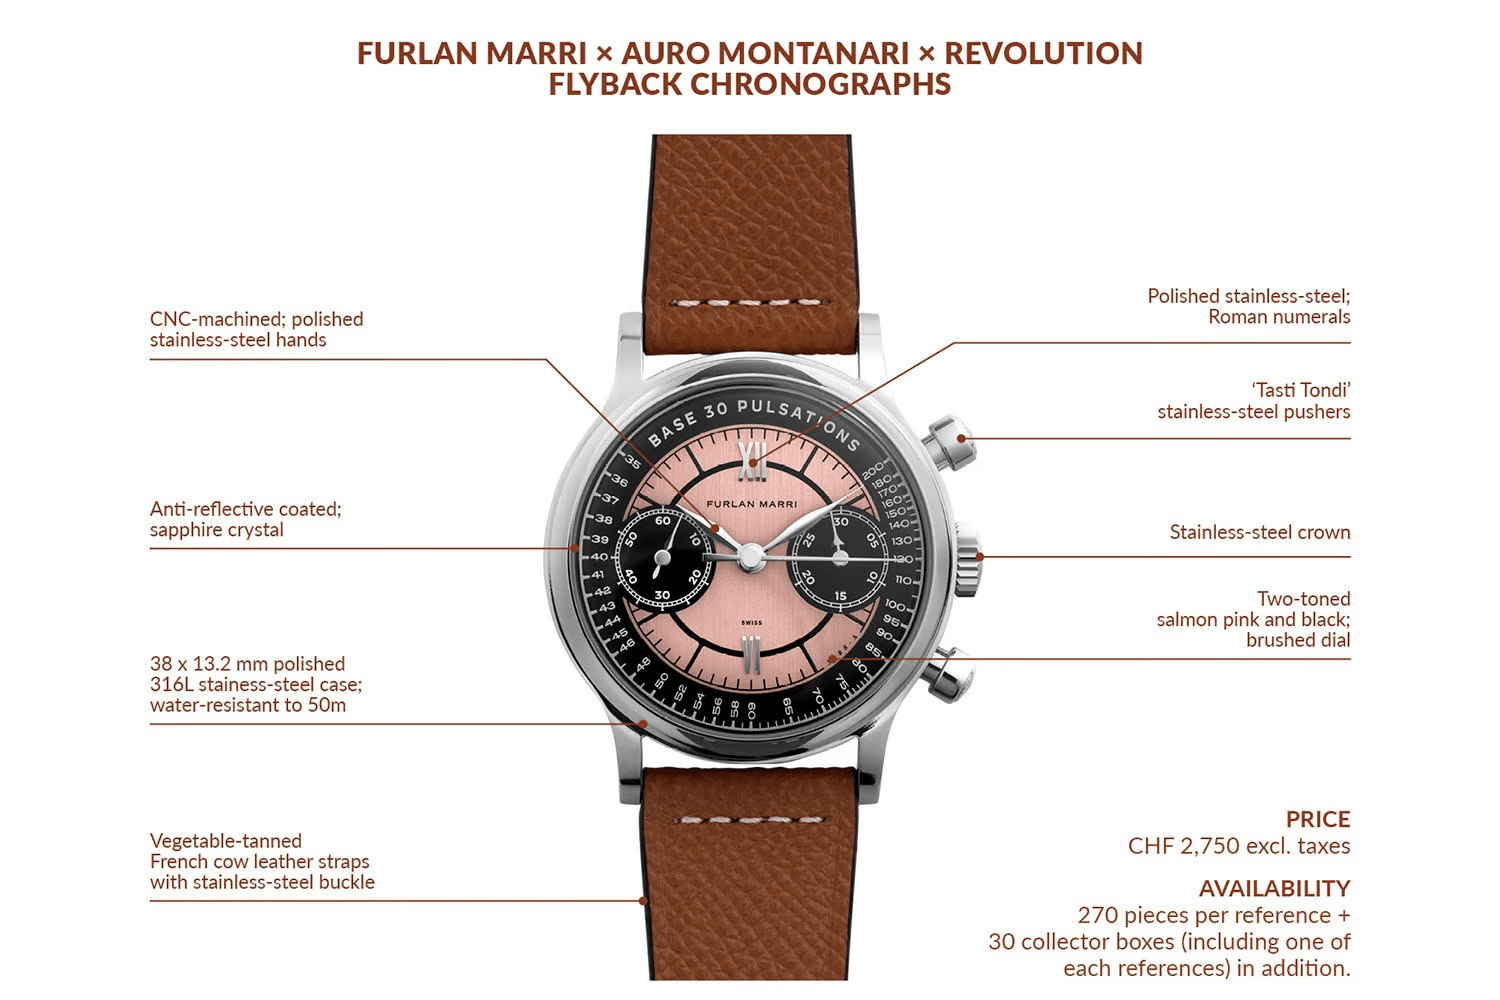 Đồng hồ Furlan Marri × Auro Montanari Flyback Chronograph